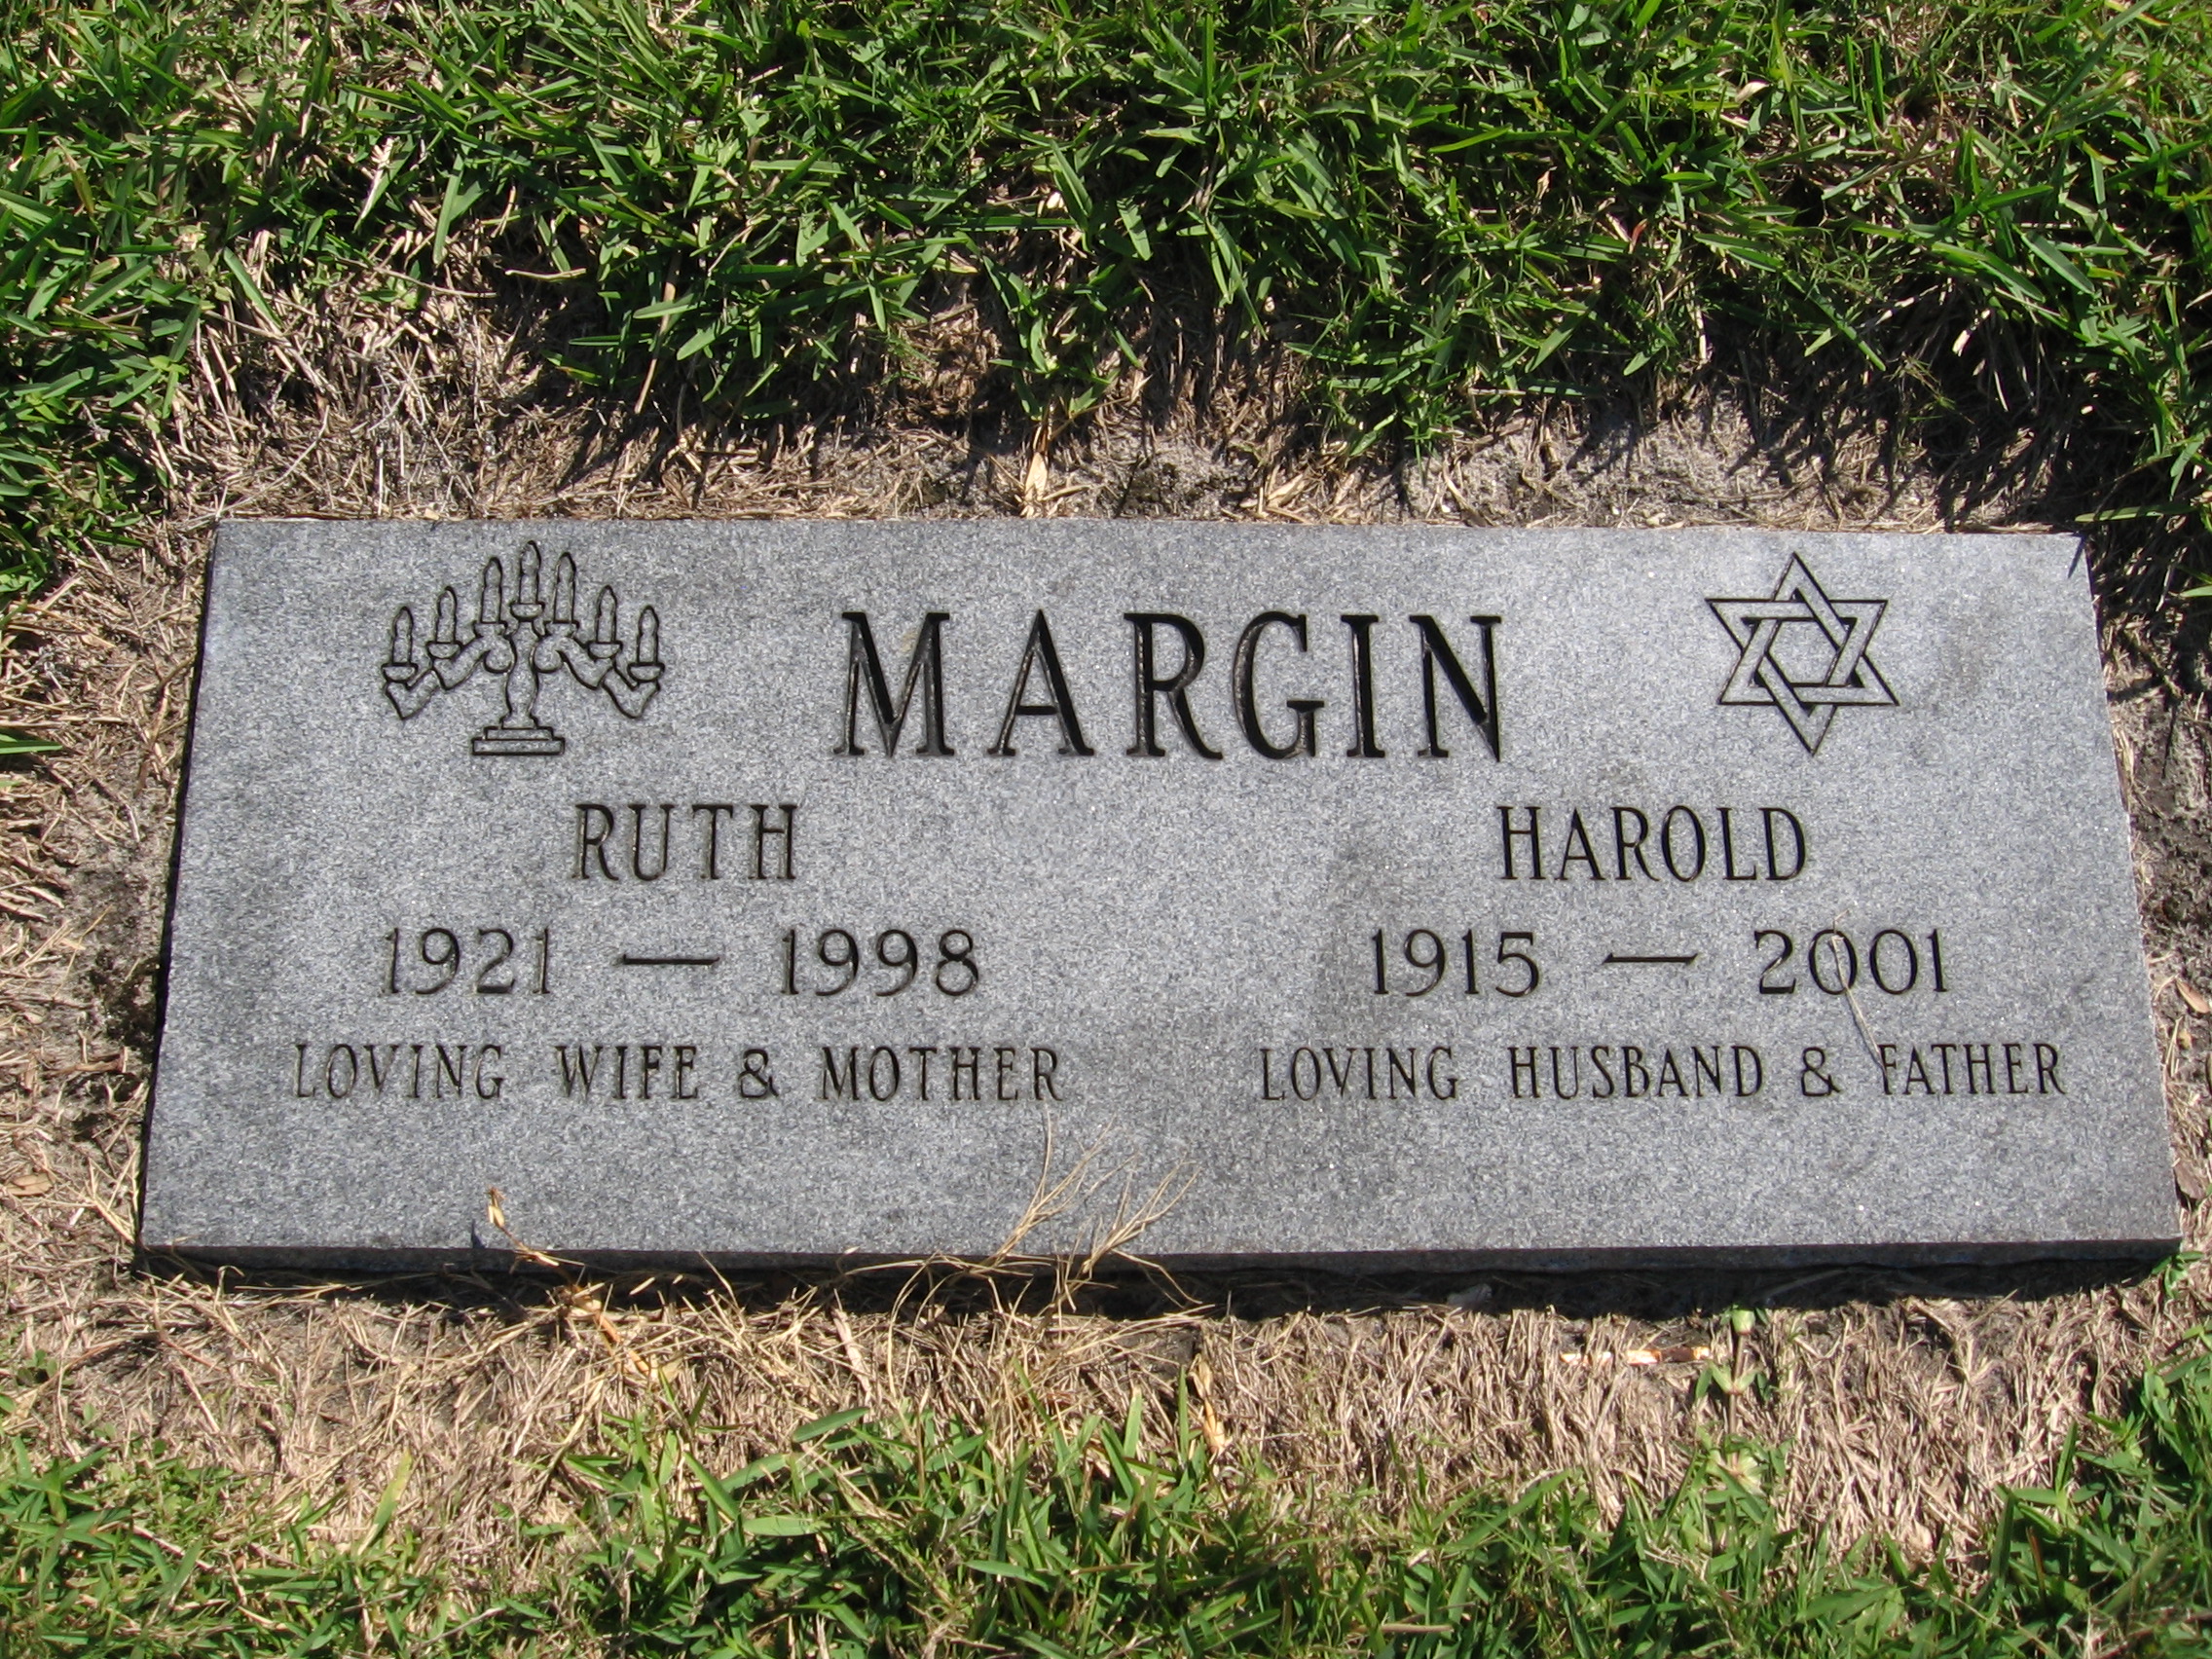 Harold Margin